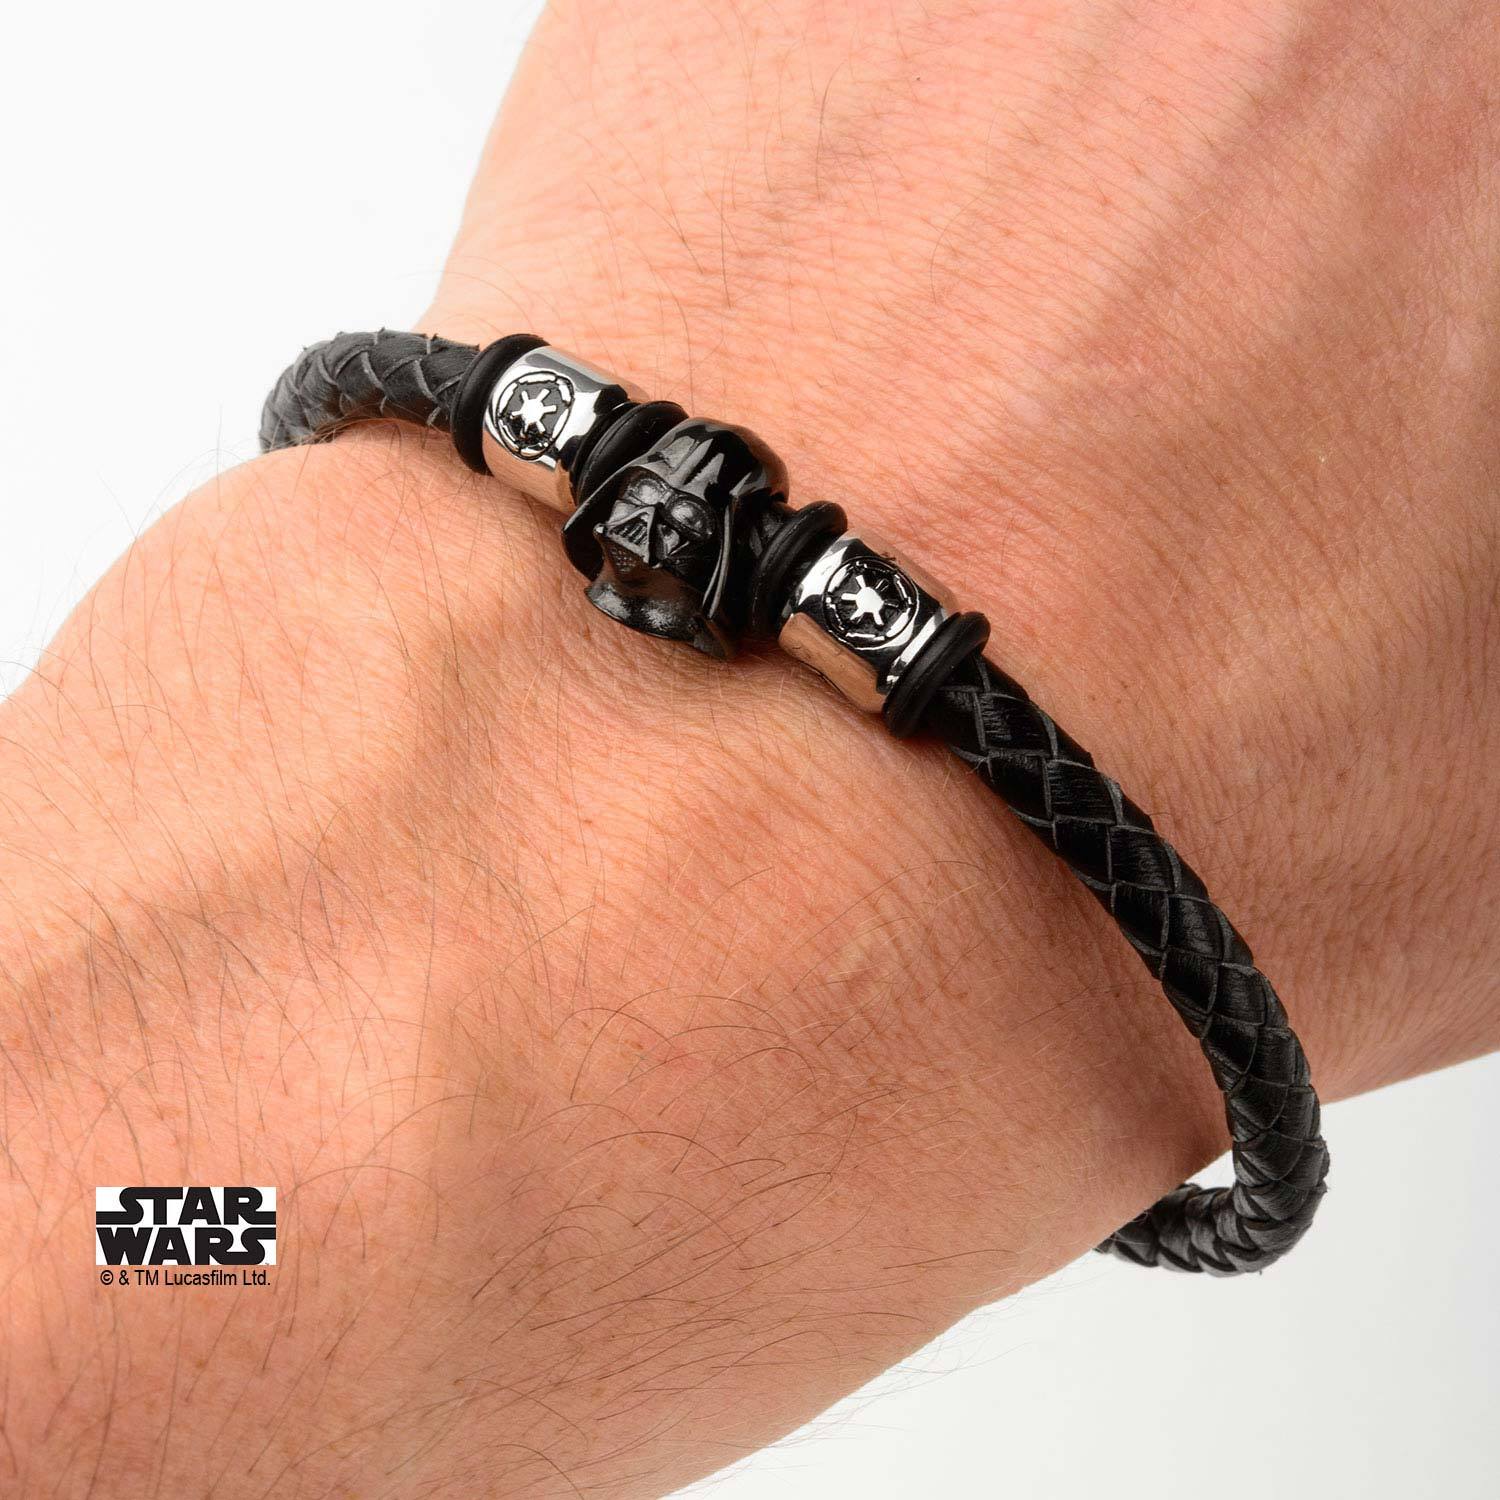 Star Wars Darth Vader Helmet and Galactic Empire Symbol Beads Leather Bracelet